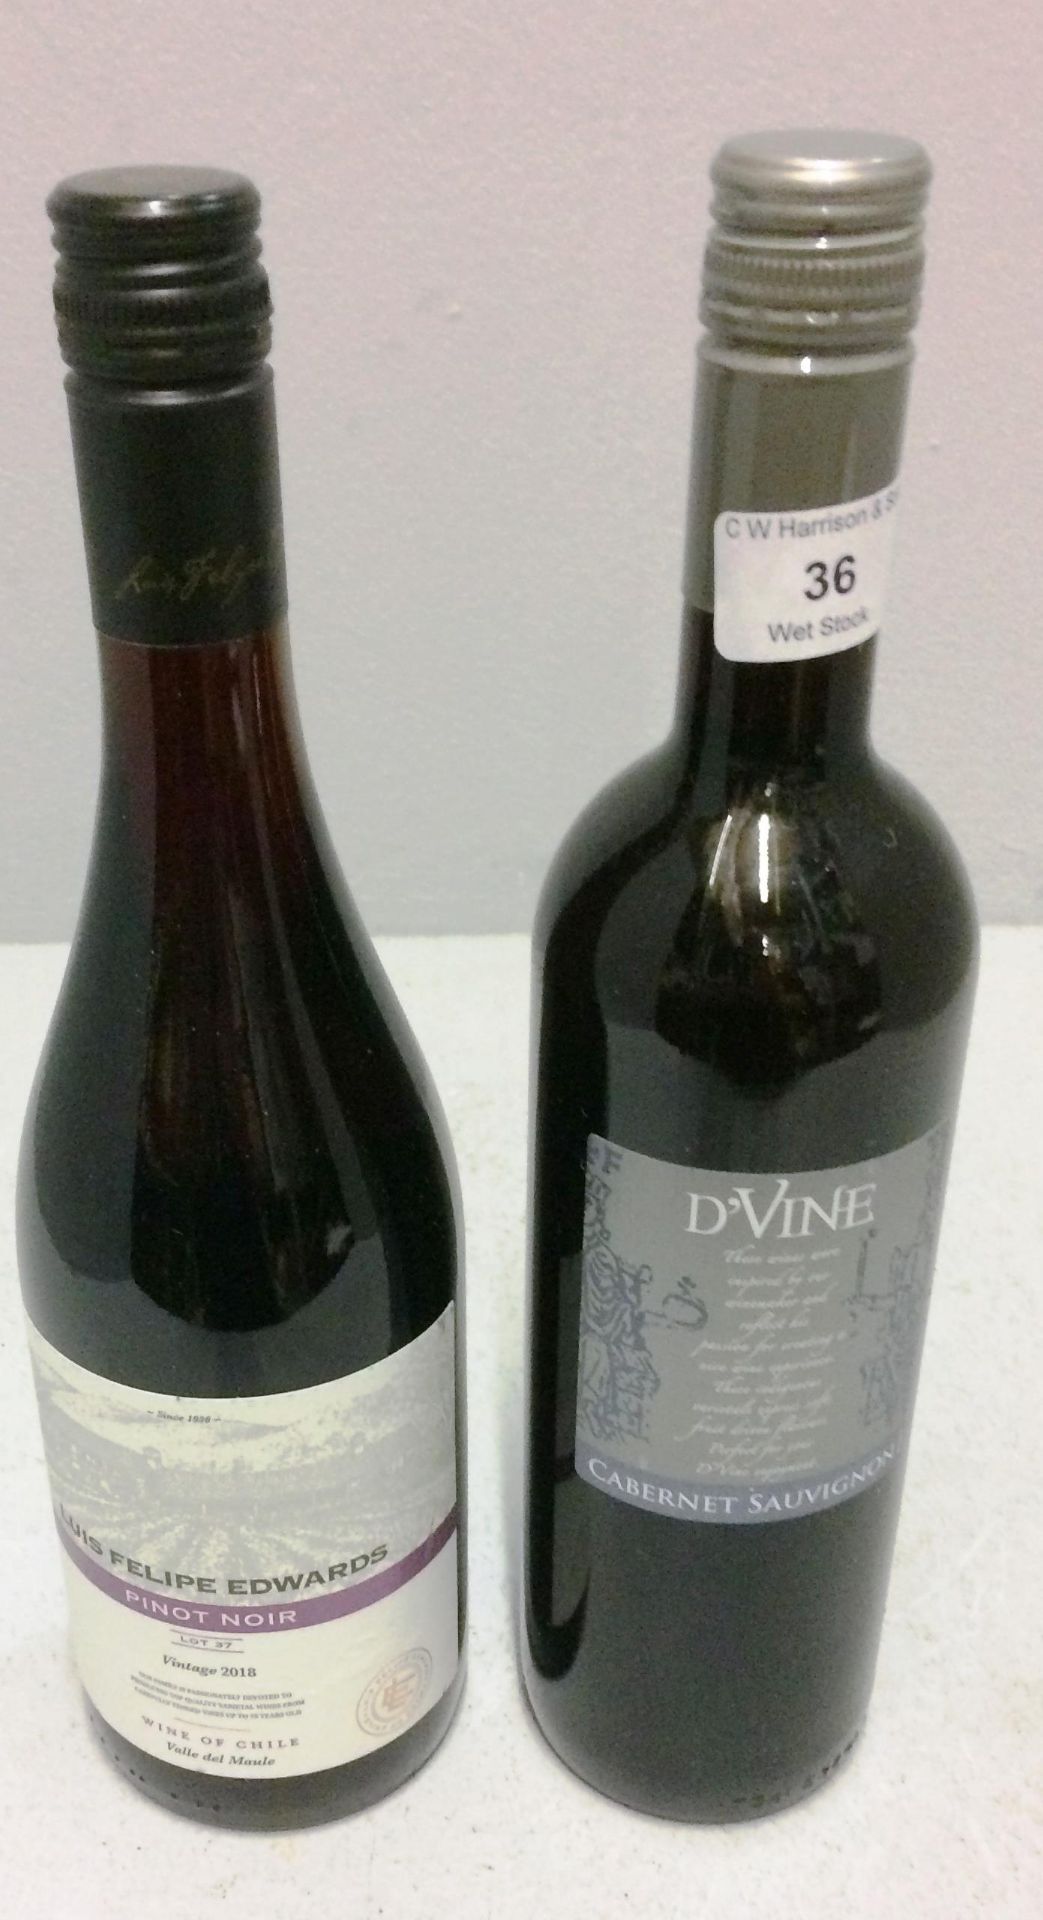 6 x items - 3 x 75cl bottles of Luis Felipe Edwards vintage 2018 Pinot Noir wine and 3 x 750ml